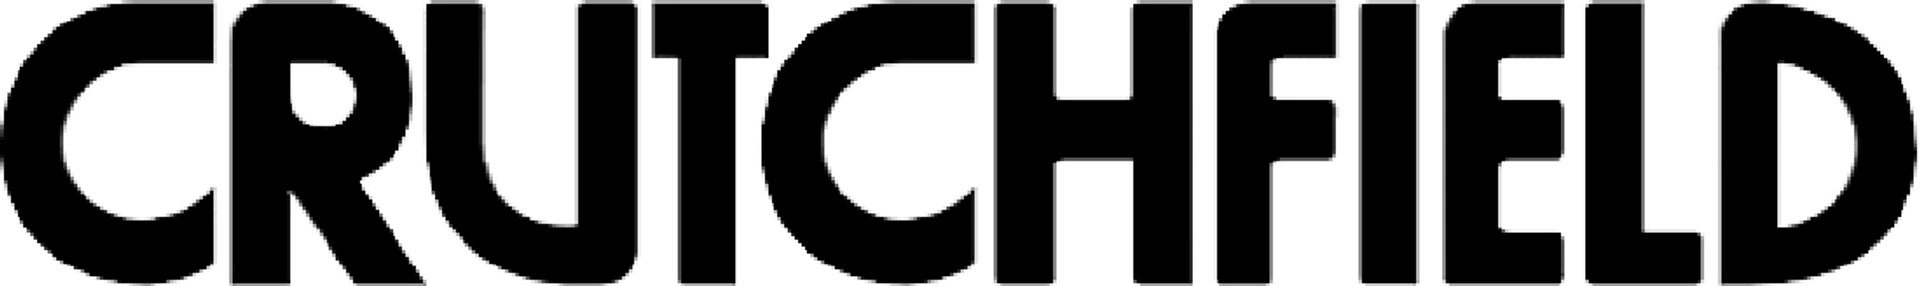 CRUTCHFIELD logo